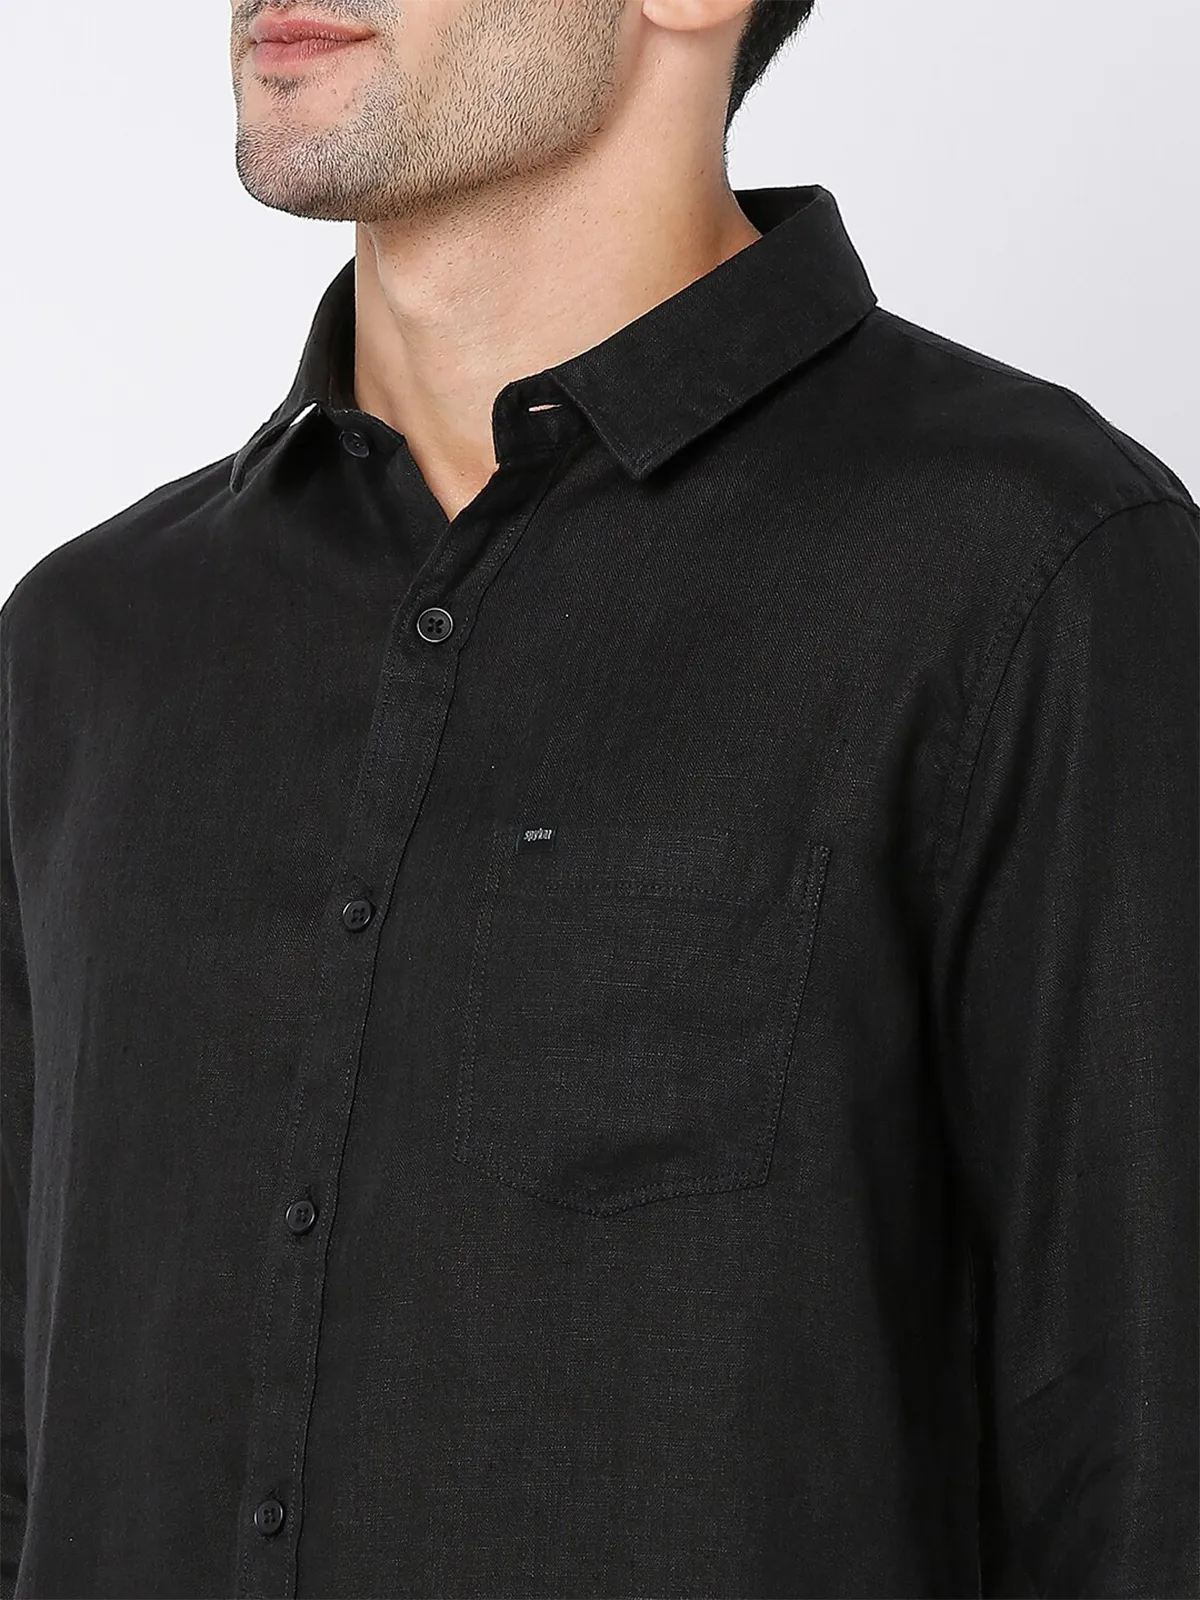 Spykar solid black cotton casual shirt